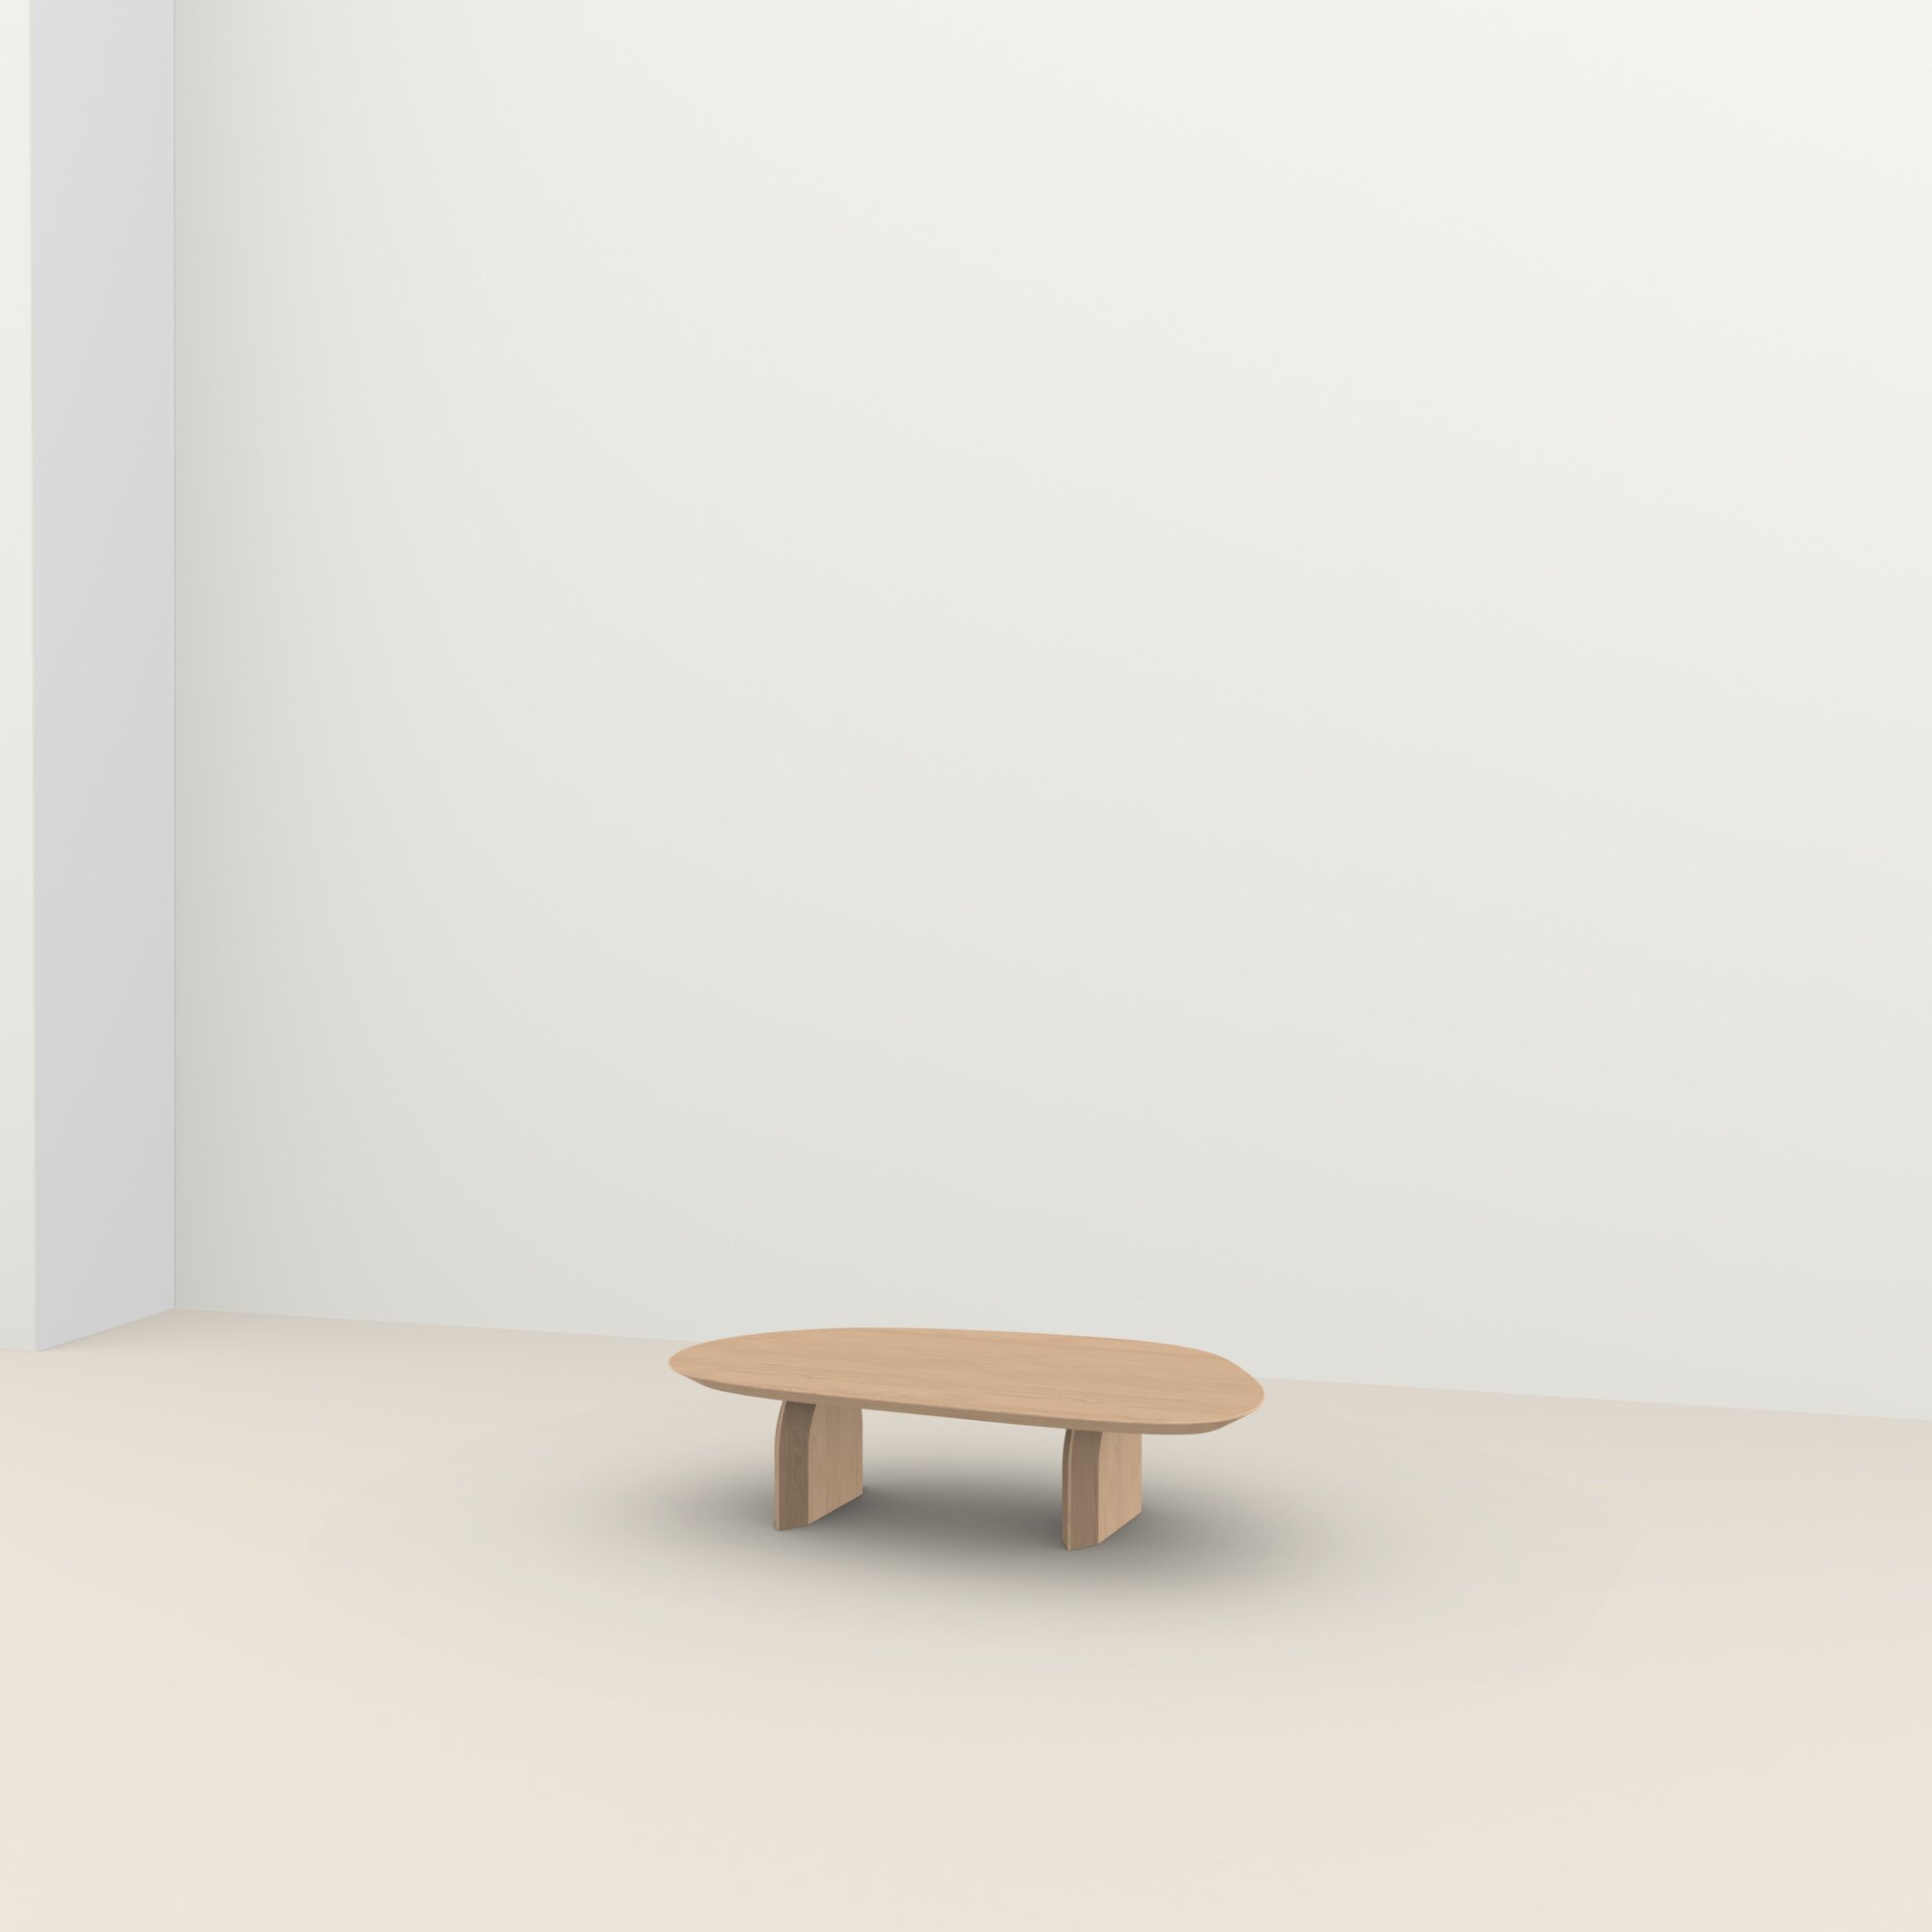 Design Coffee Table | Slot Coffee Table Oak hardwax oil natural light 3041 | Oak hardwax oil natural light 3041 | Studio HENK | 